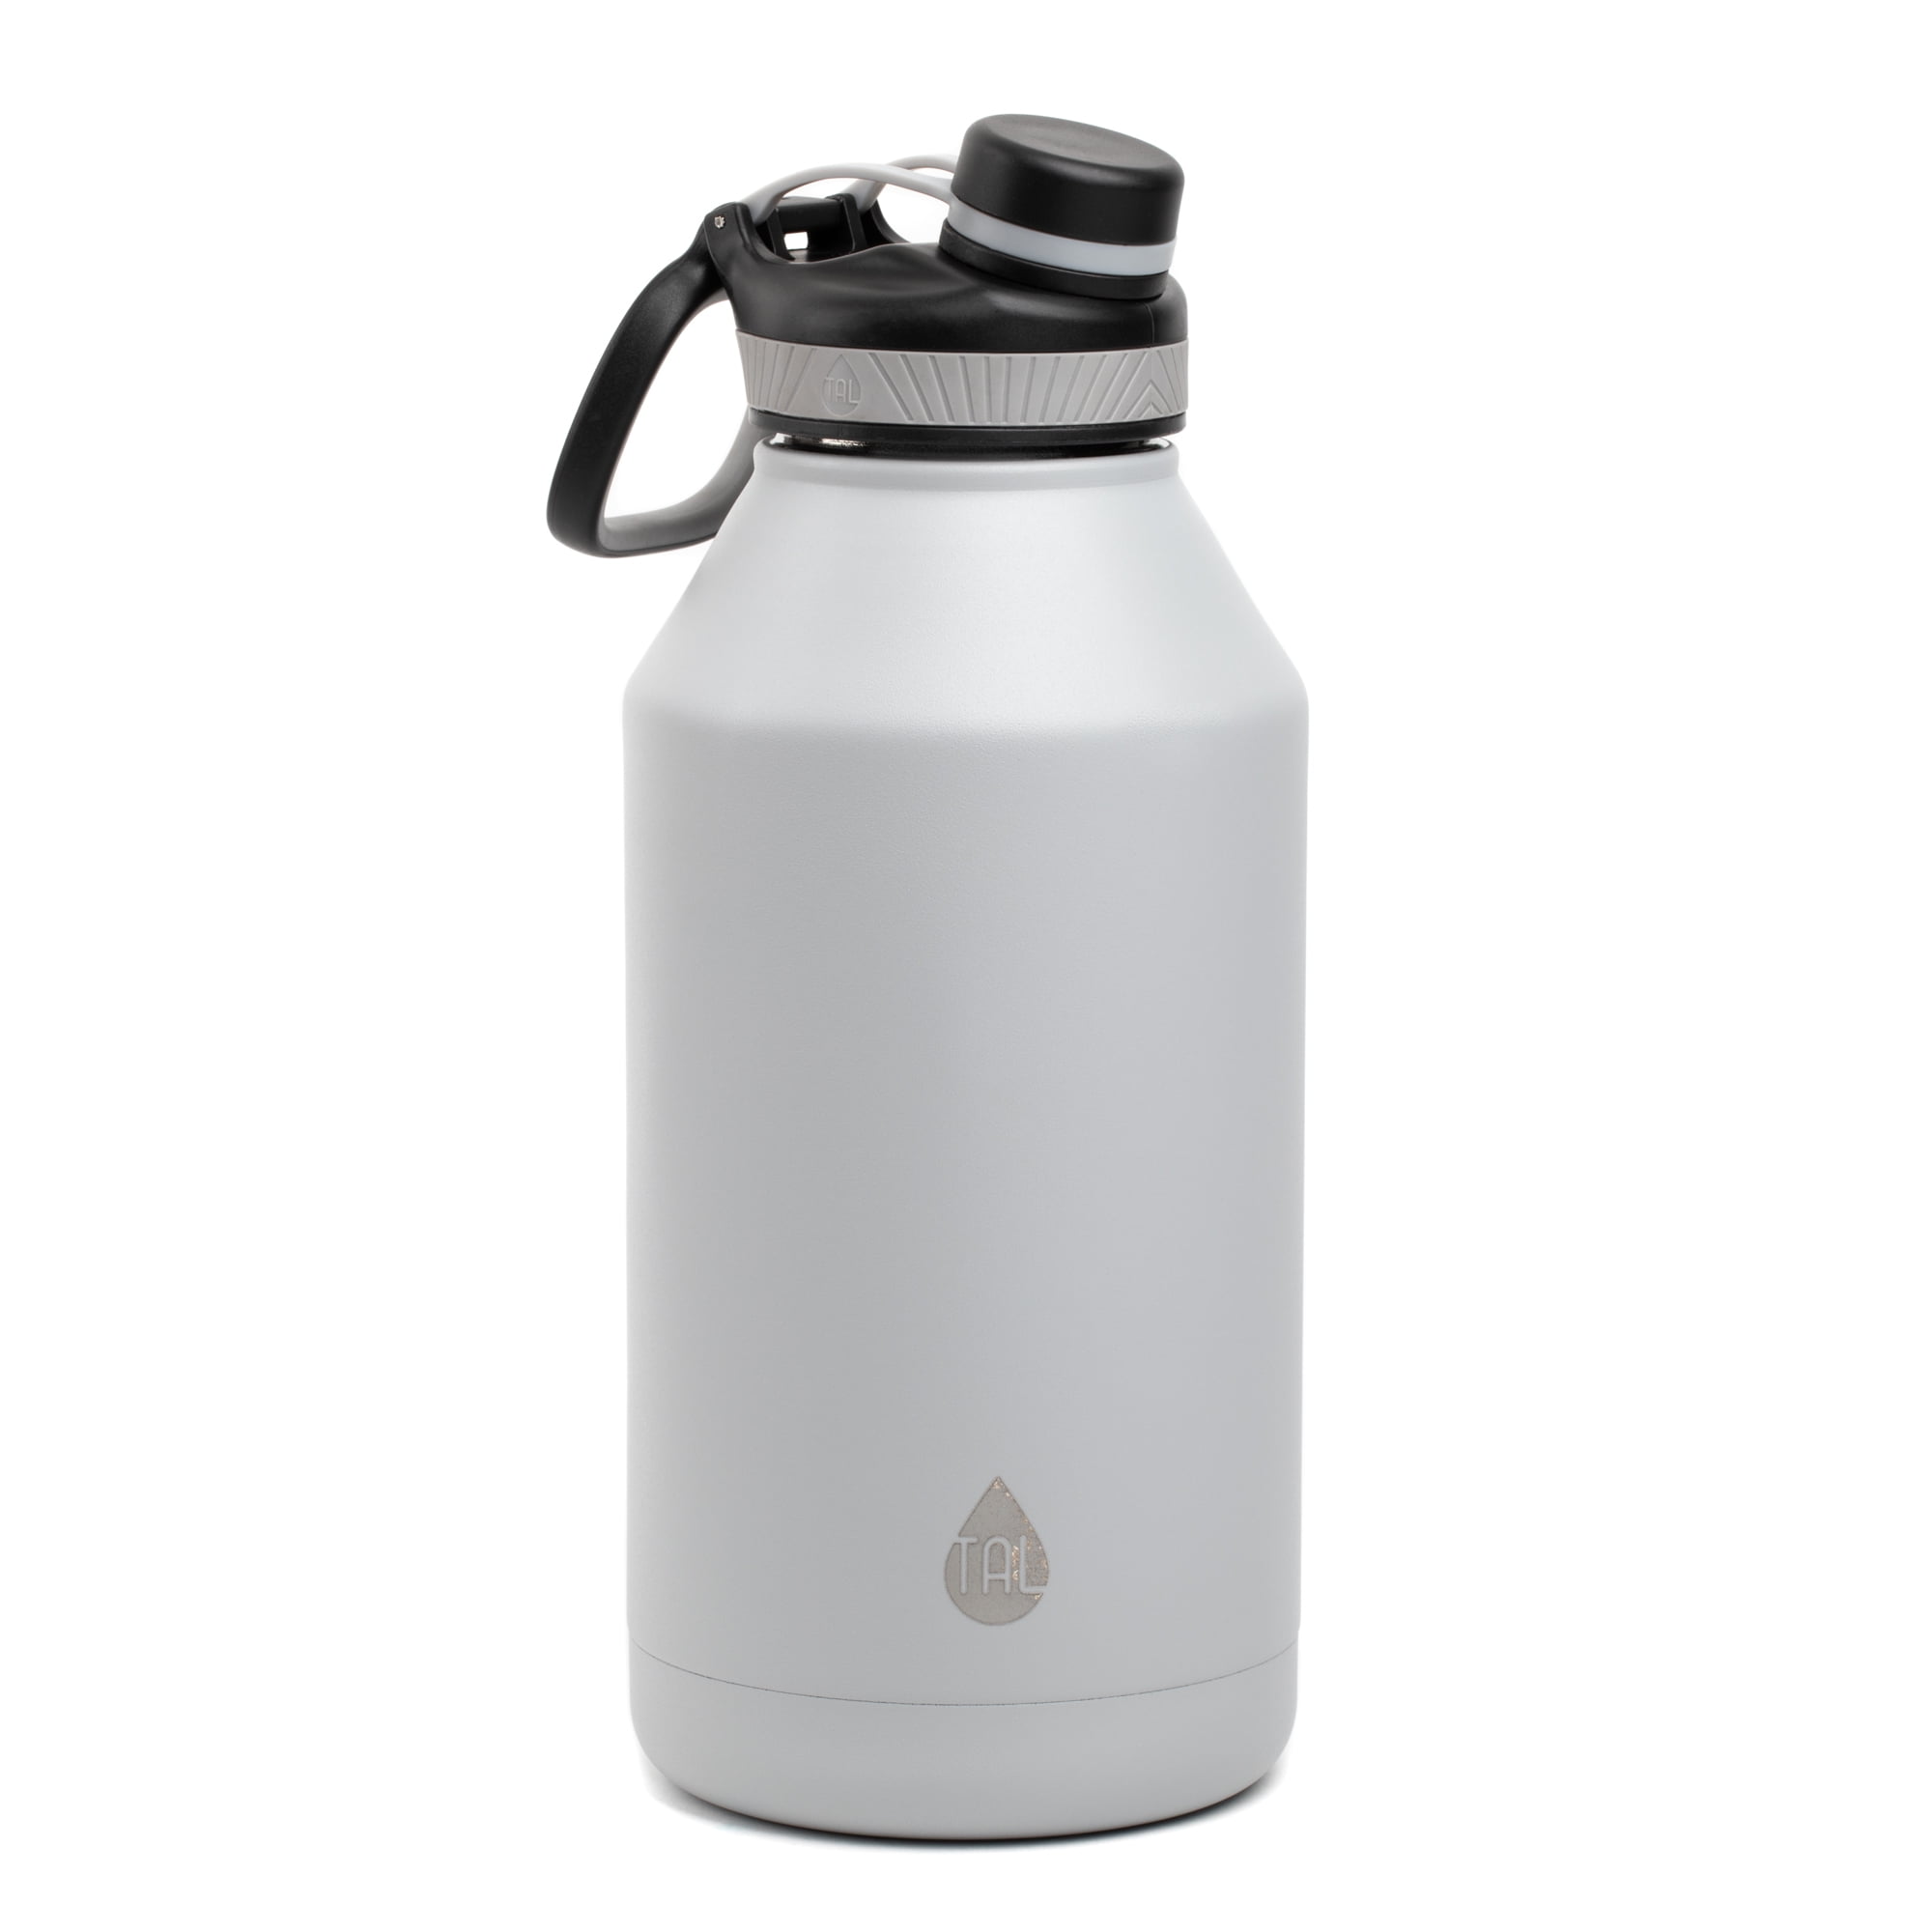 TAL Stainless Steel Ranger Water Bottle 64 fl oz, Gray - Yahoo